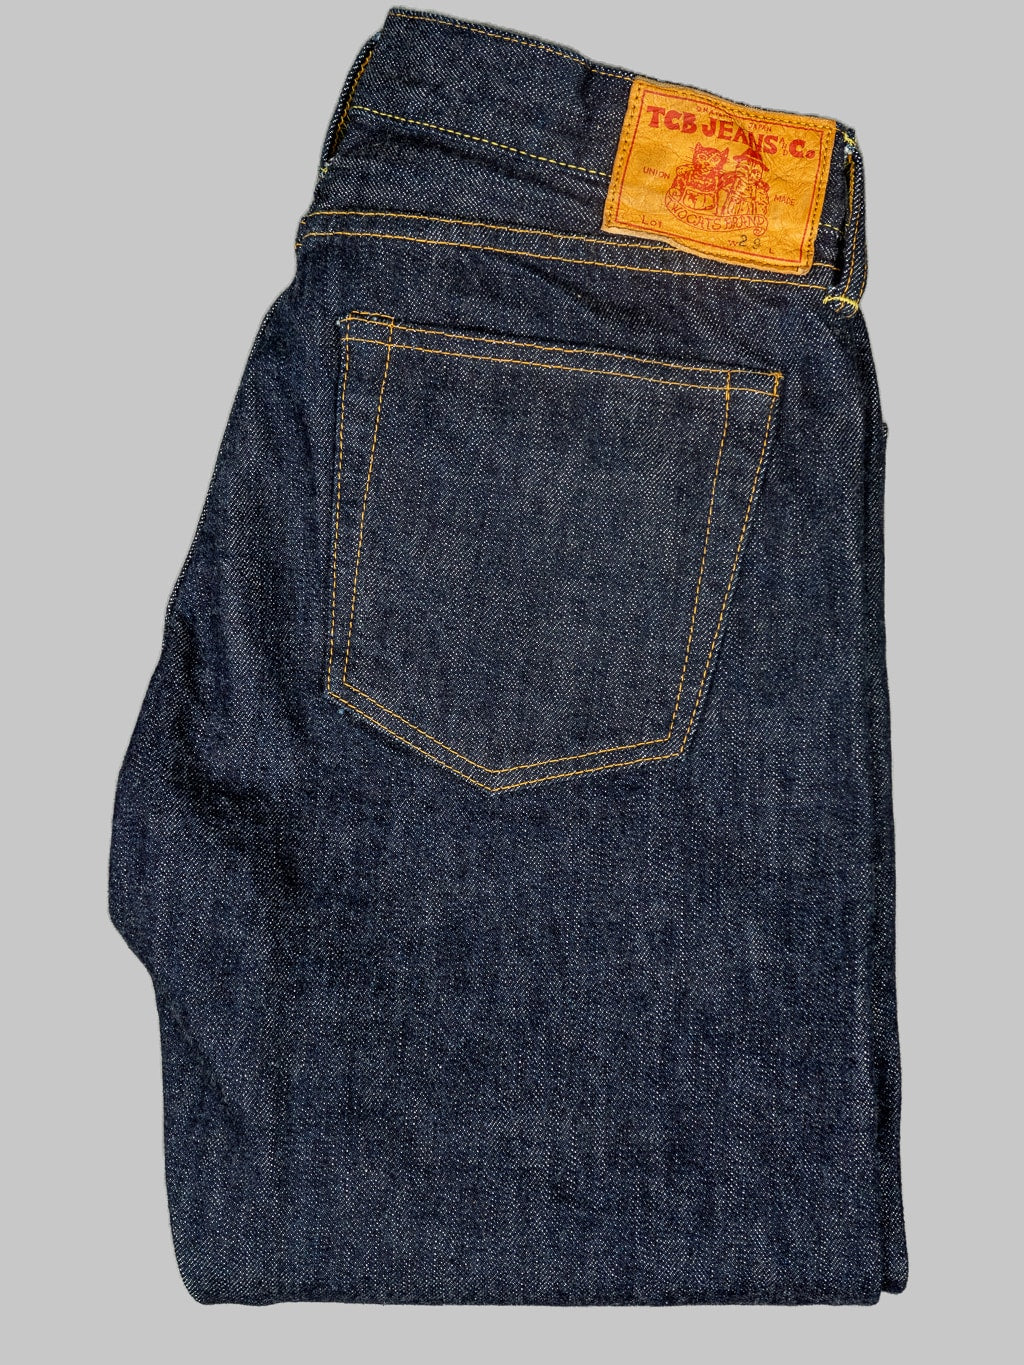 tcb jeans slim 50s selvedge japanese denim slim fit